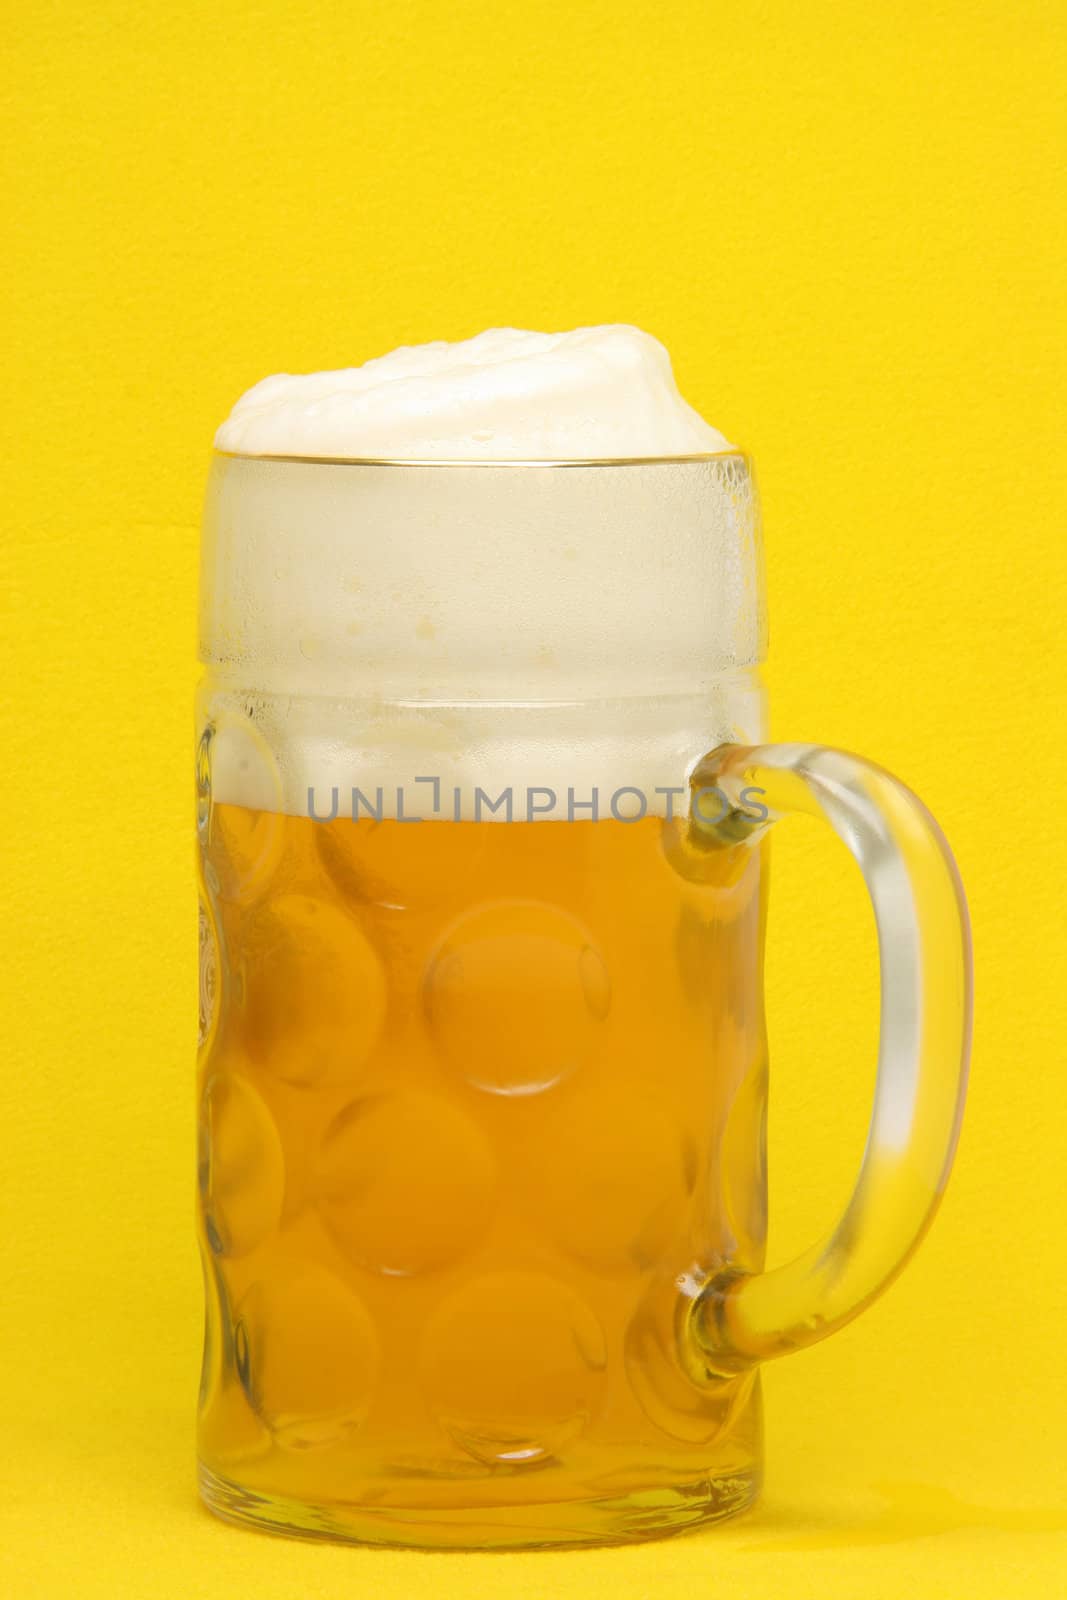 classic bavarian beer mug  in yellow background